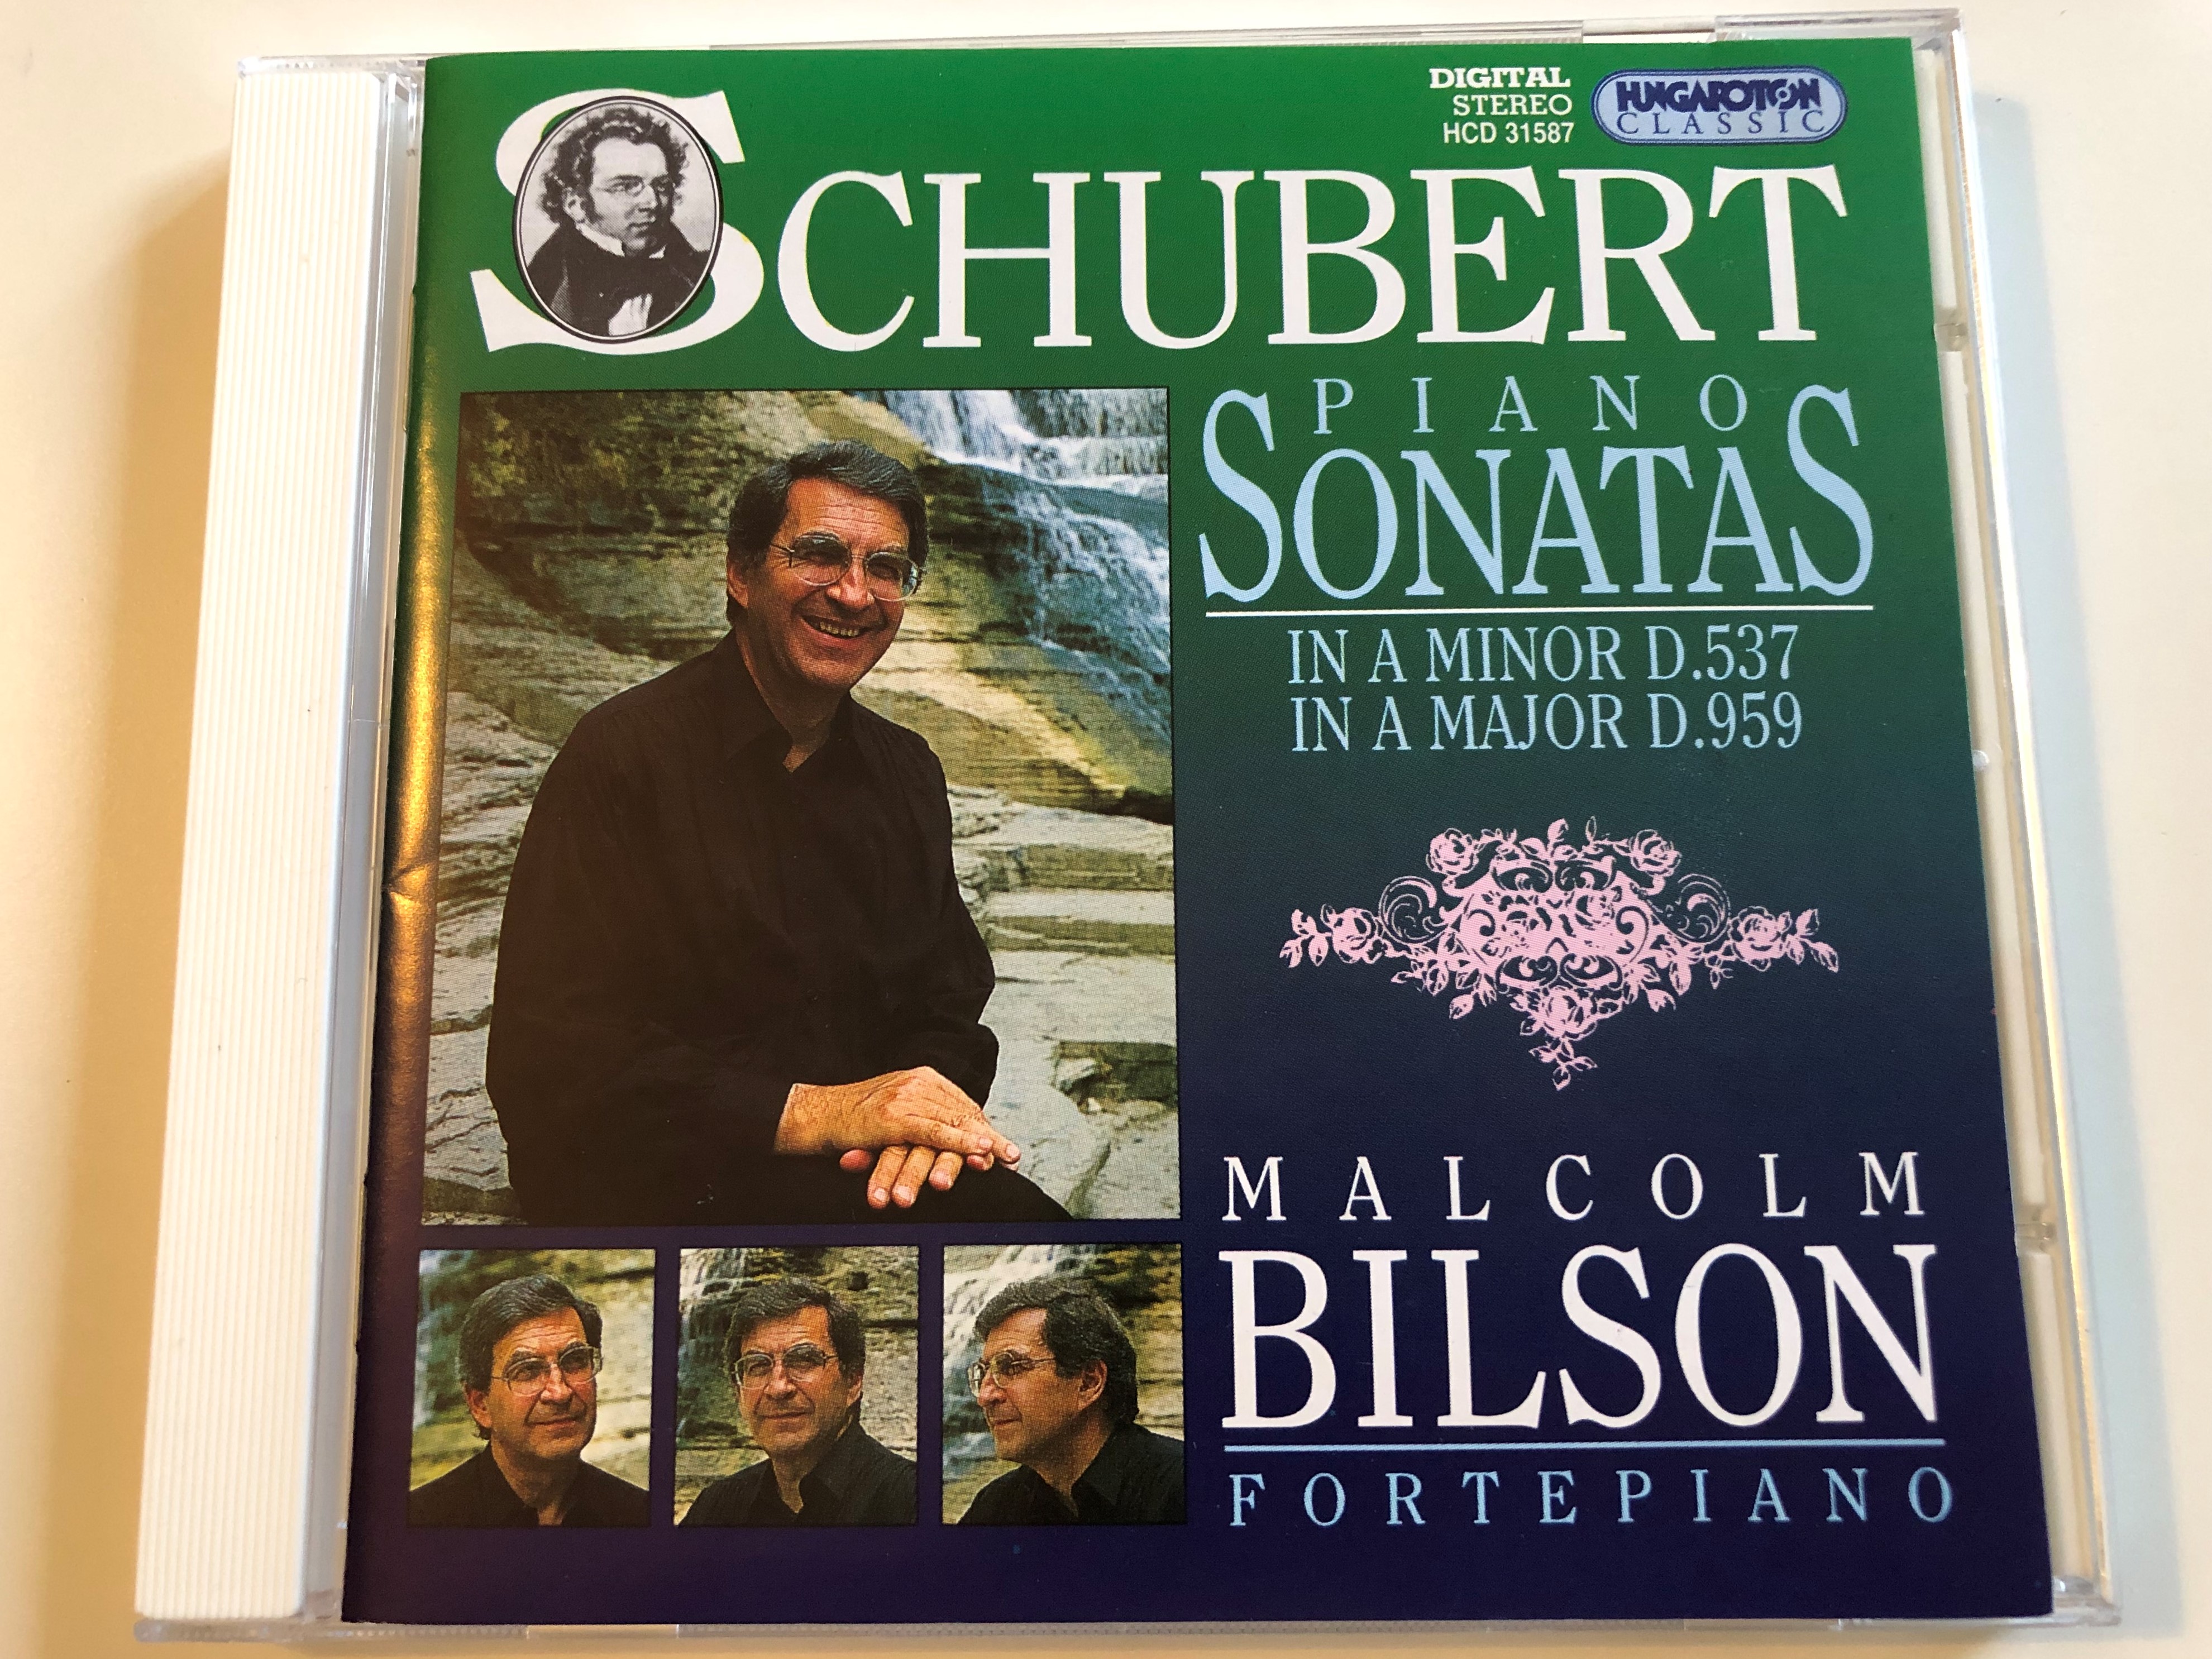 schubert-piano-sonatas-in-a-minor-d.537-a-major-d.959-malcolm-bilson-fortepiano-hcd-3158-audio-cd-1995-hungaroton-1-.jpg